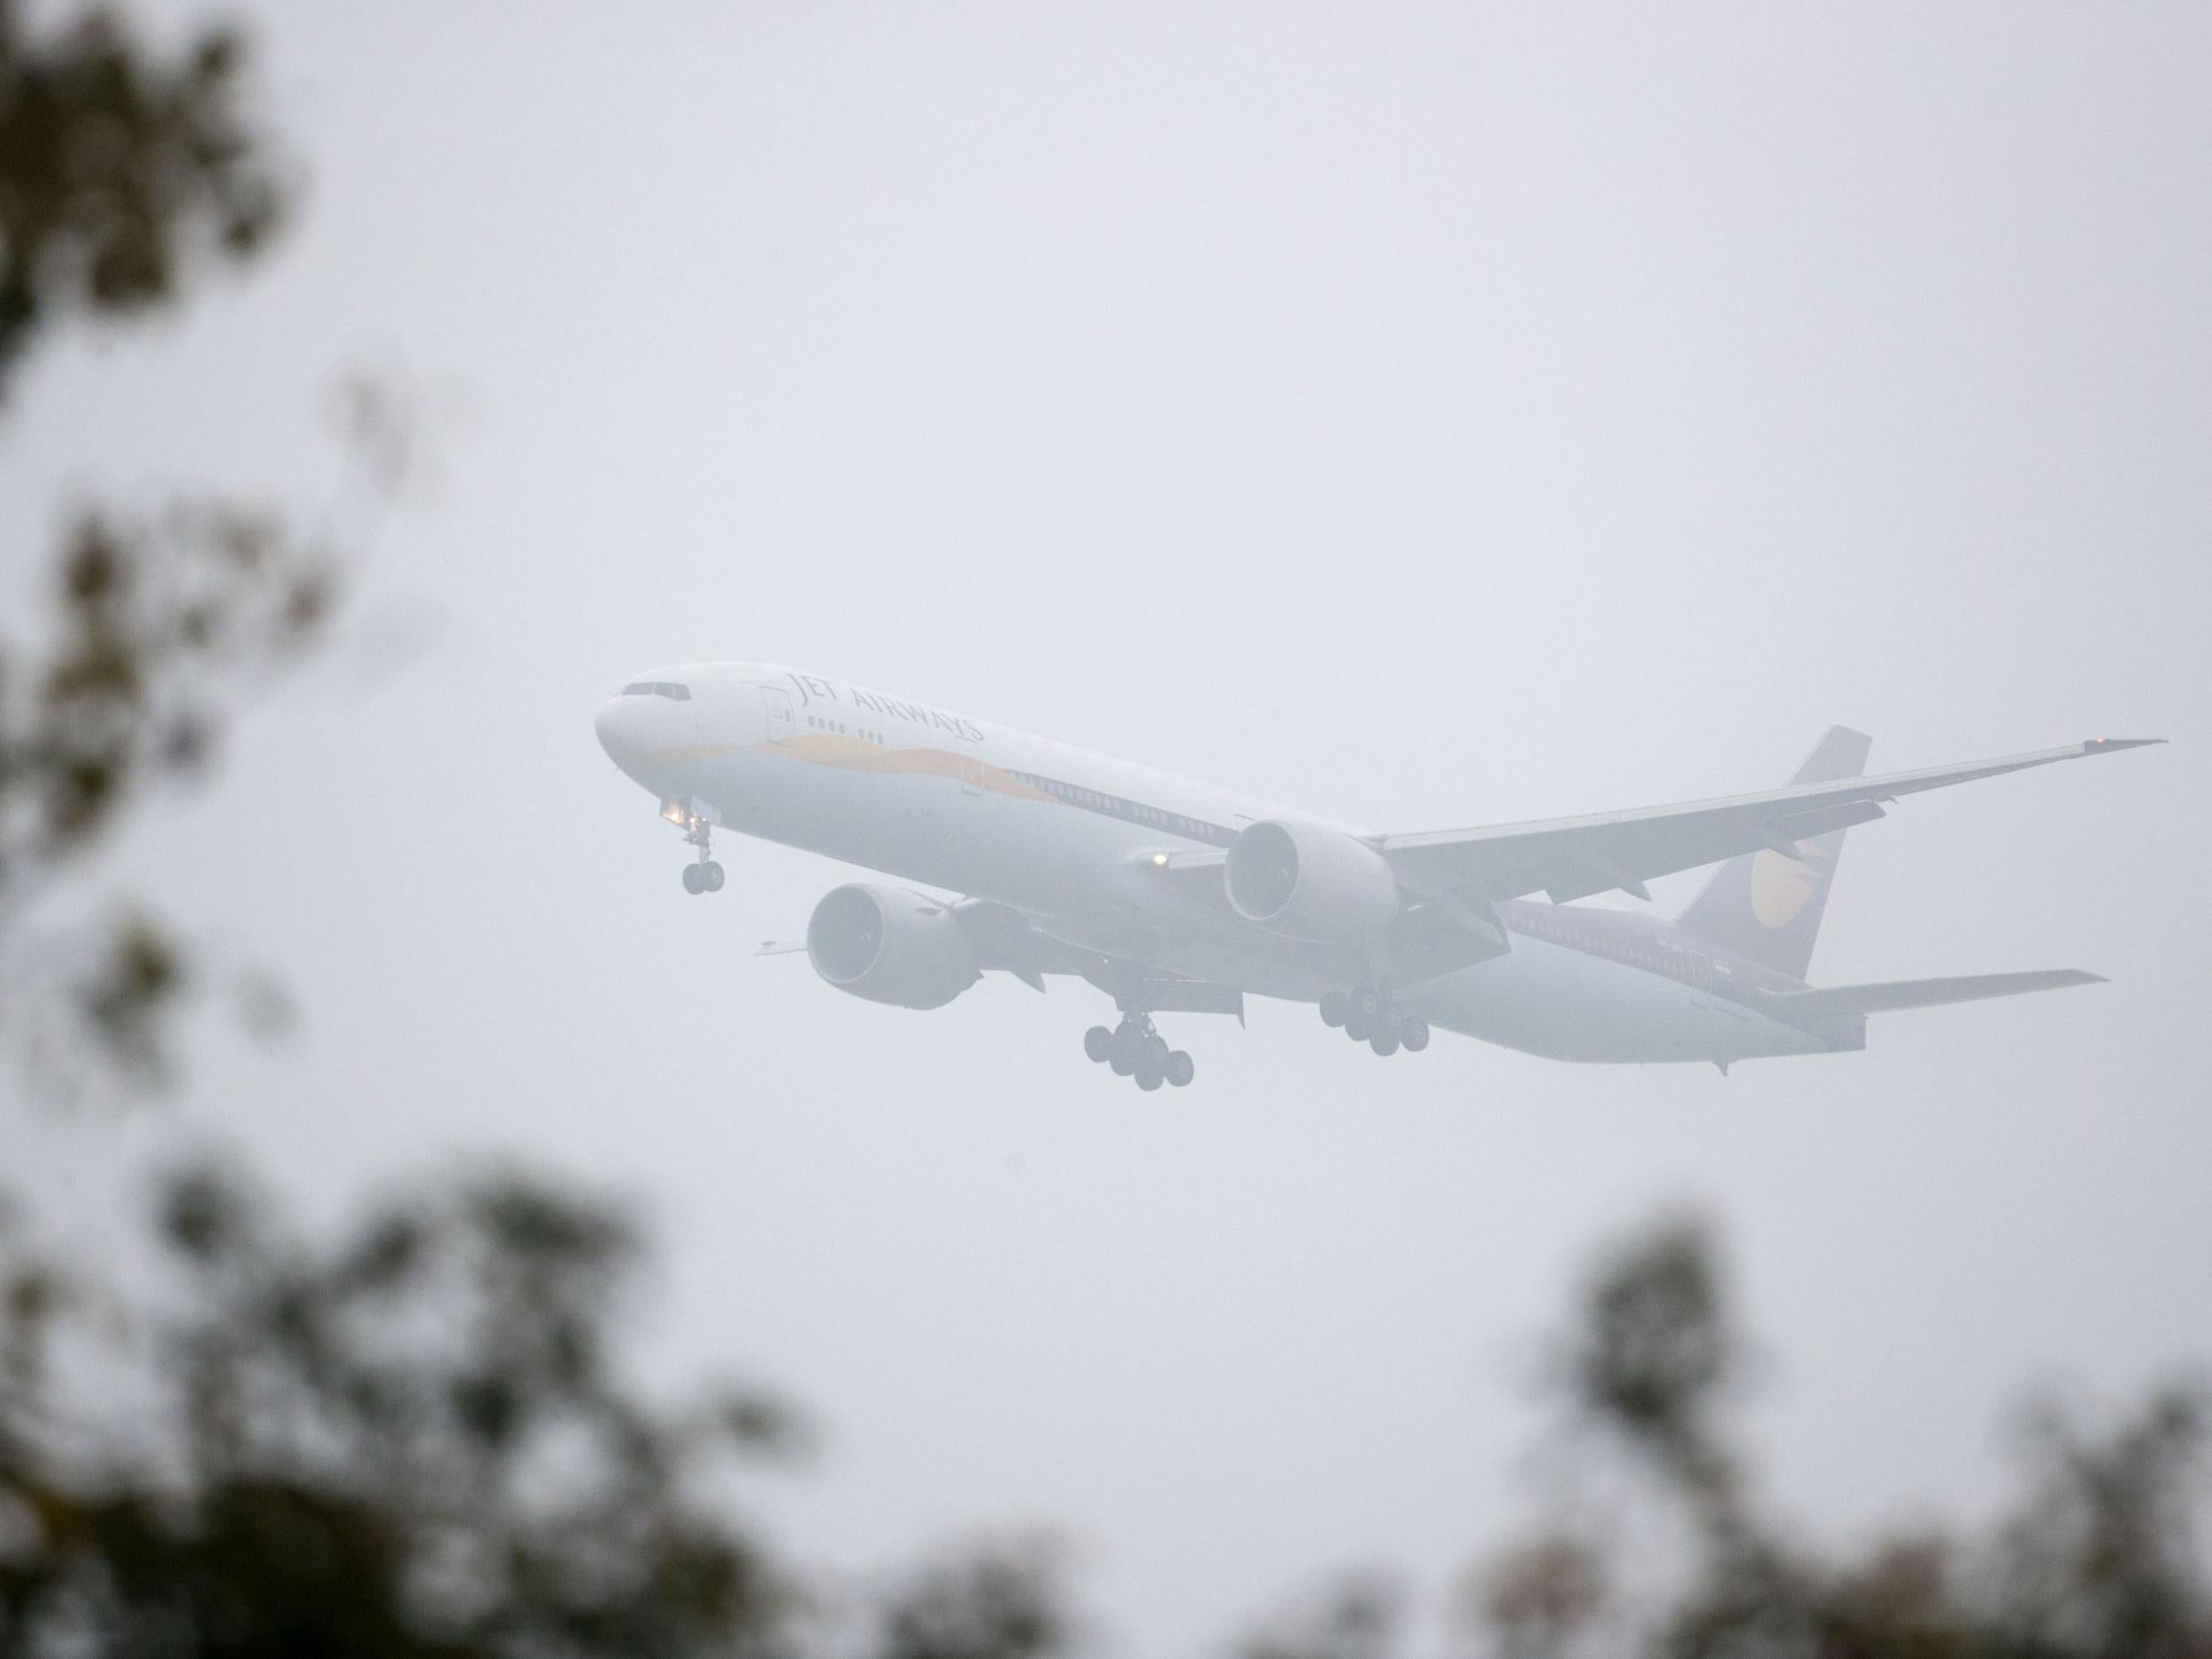 A Jet Airways plane lands in severe fog at Heathrow Airport